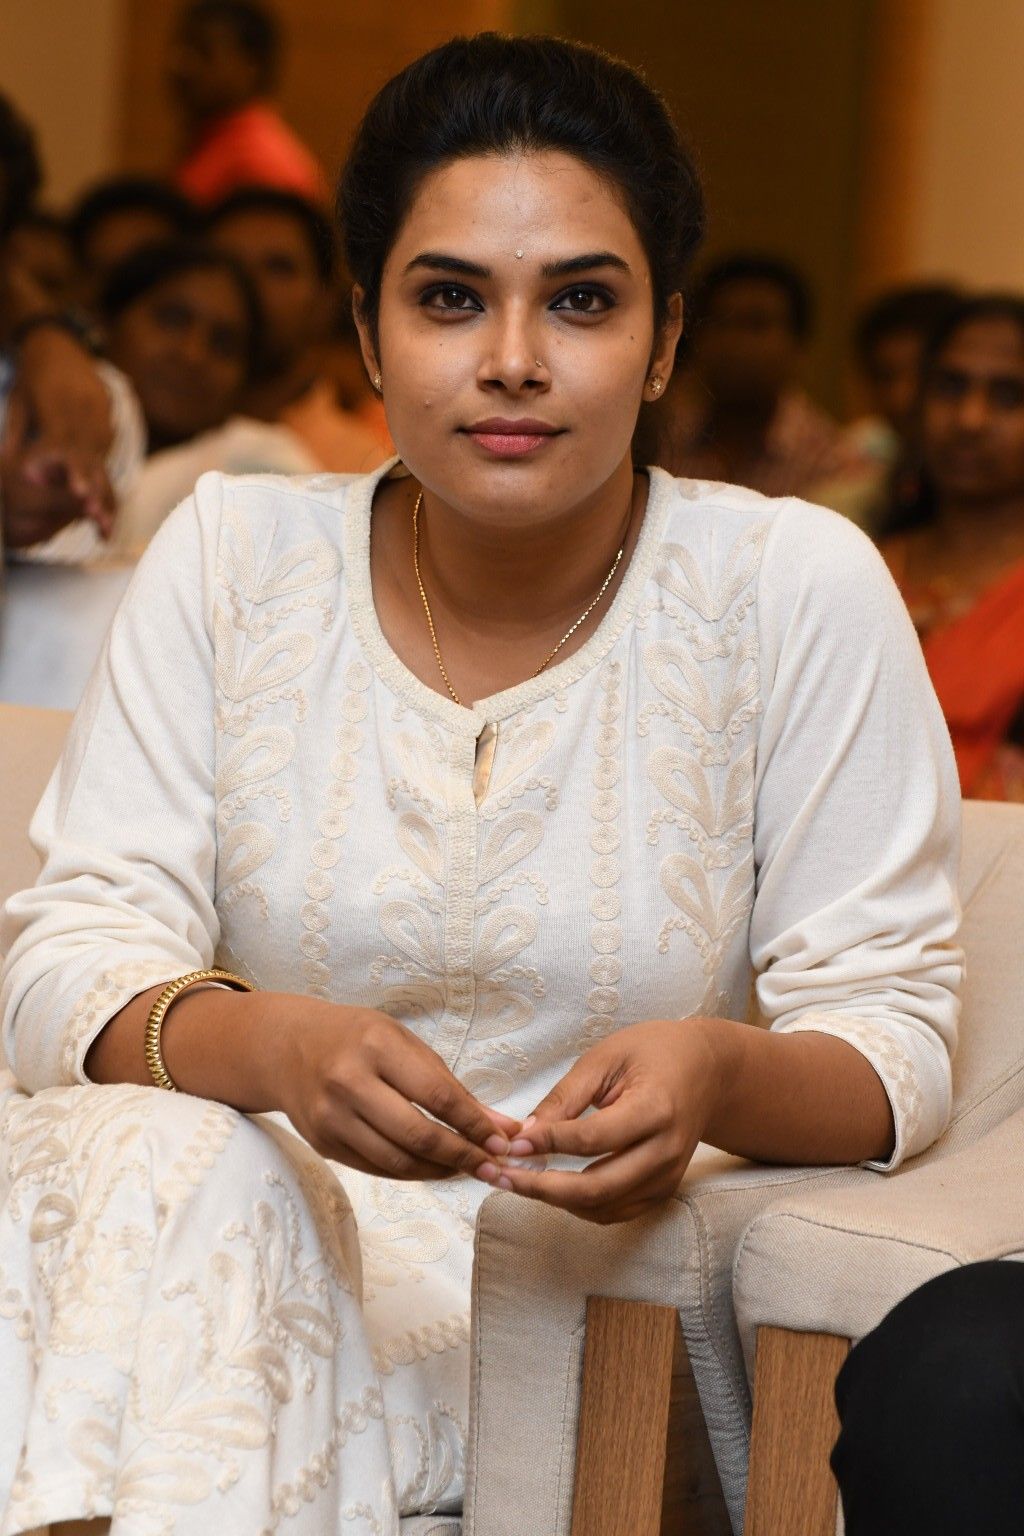 Telugu Galleries. Photo. Event Photo. Telugu Actress. Telugu